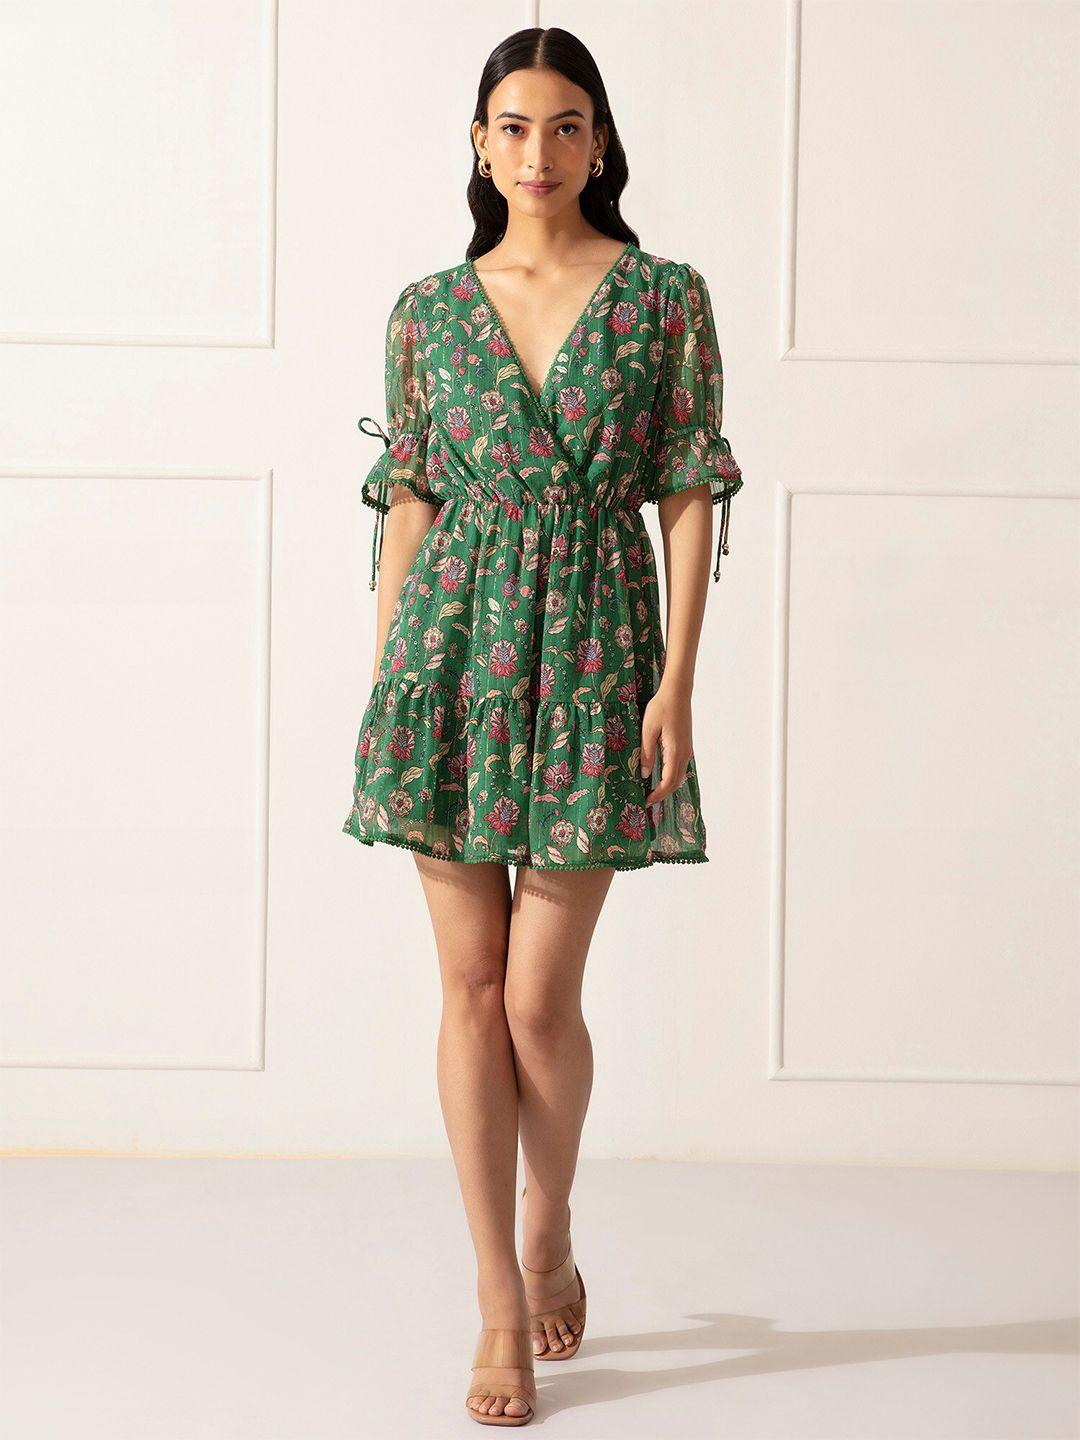 20dresses green floral chiffon dress